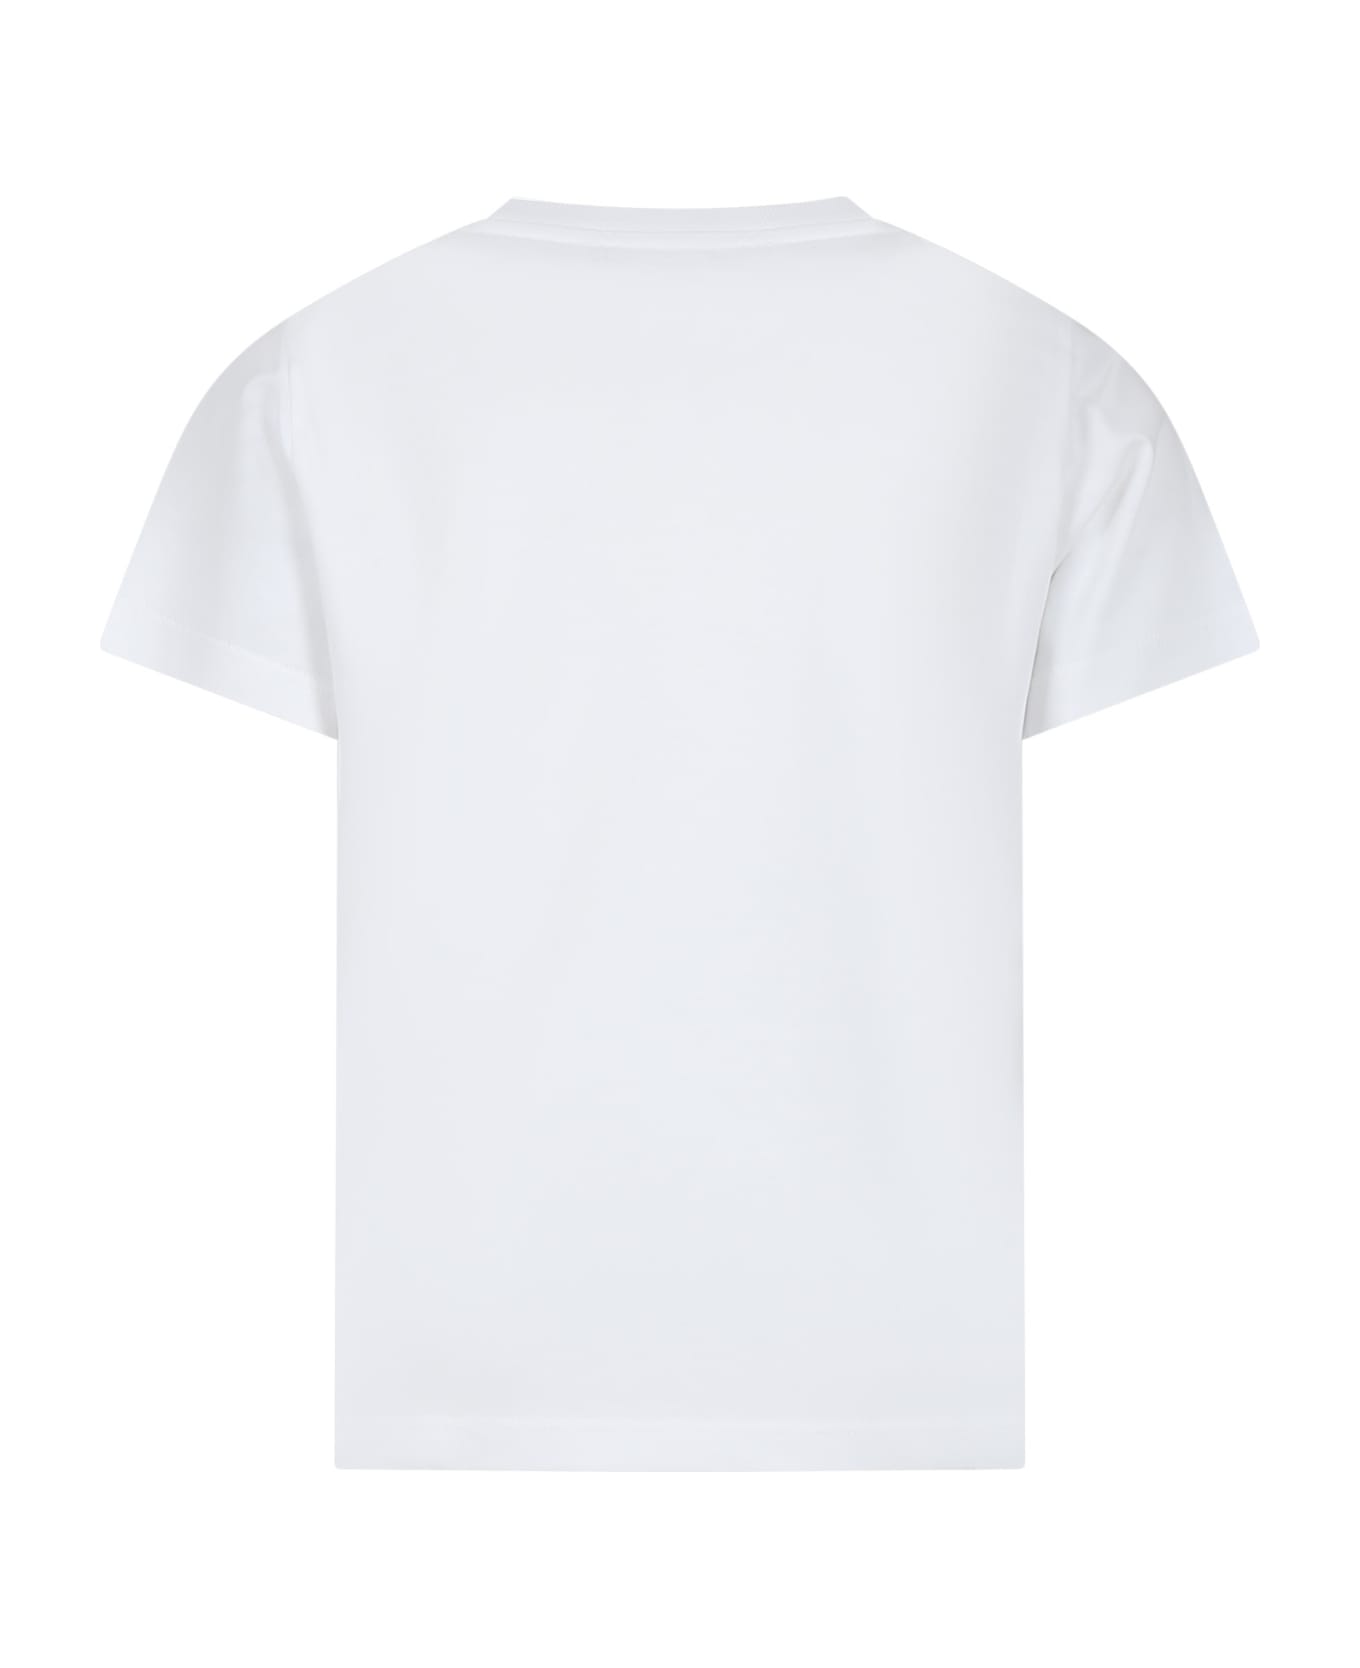 Balmain White T-shirt For Kids With Logo - White/black